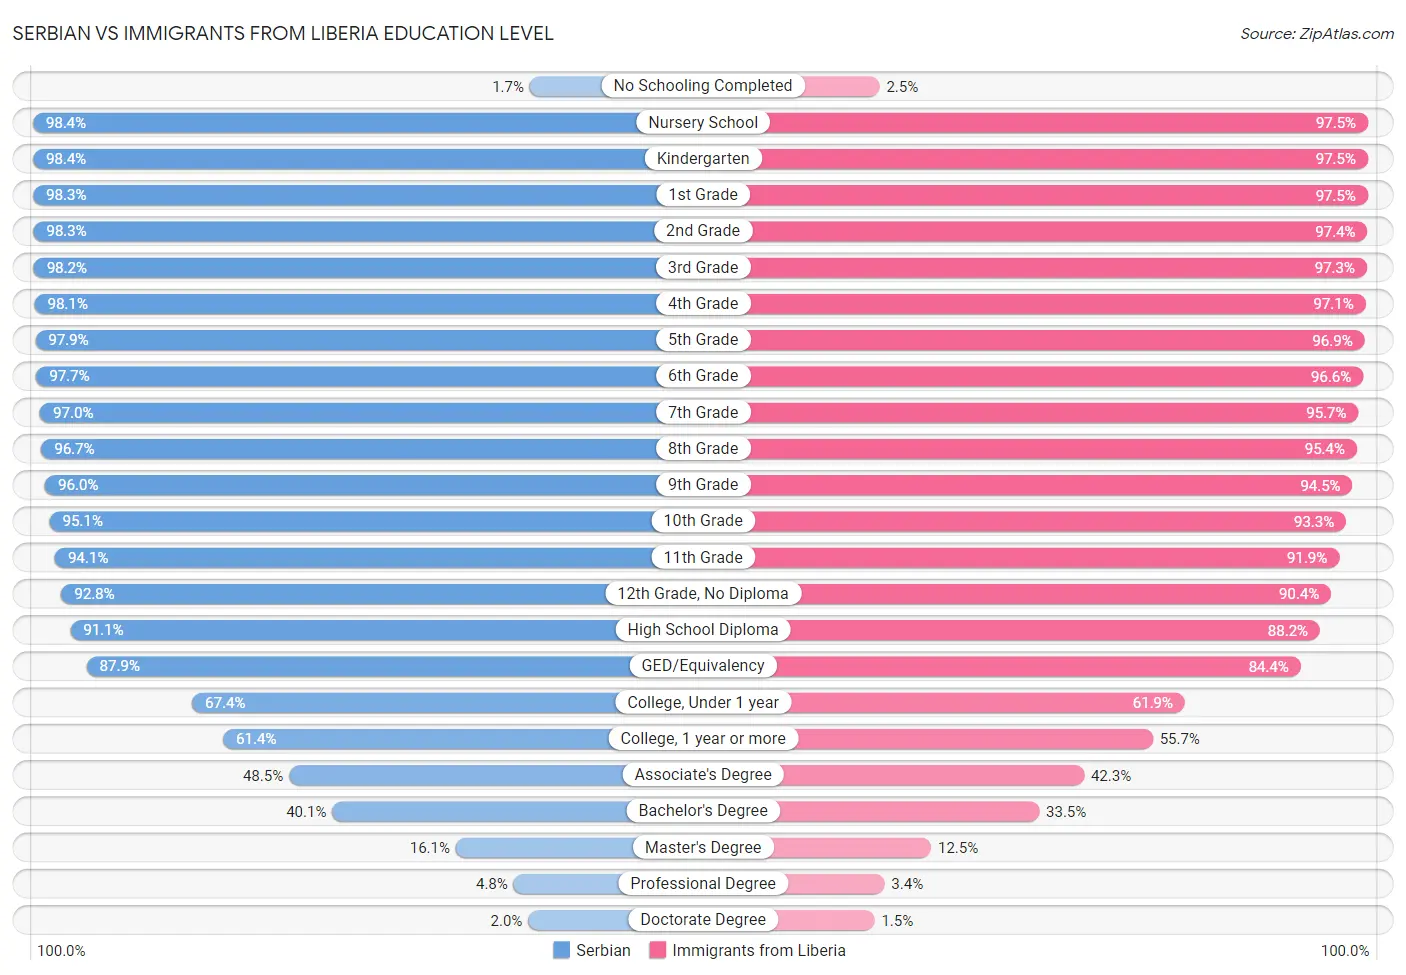 Serbian vs Immigrants from Liberia Education Level